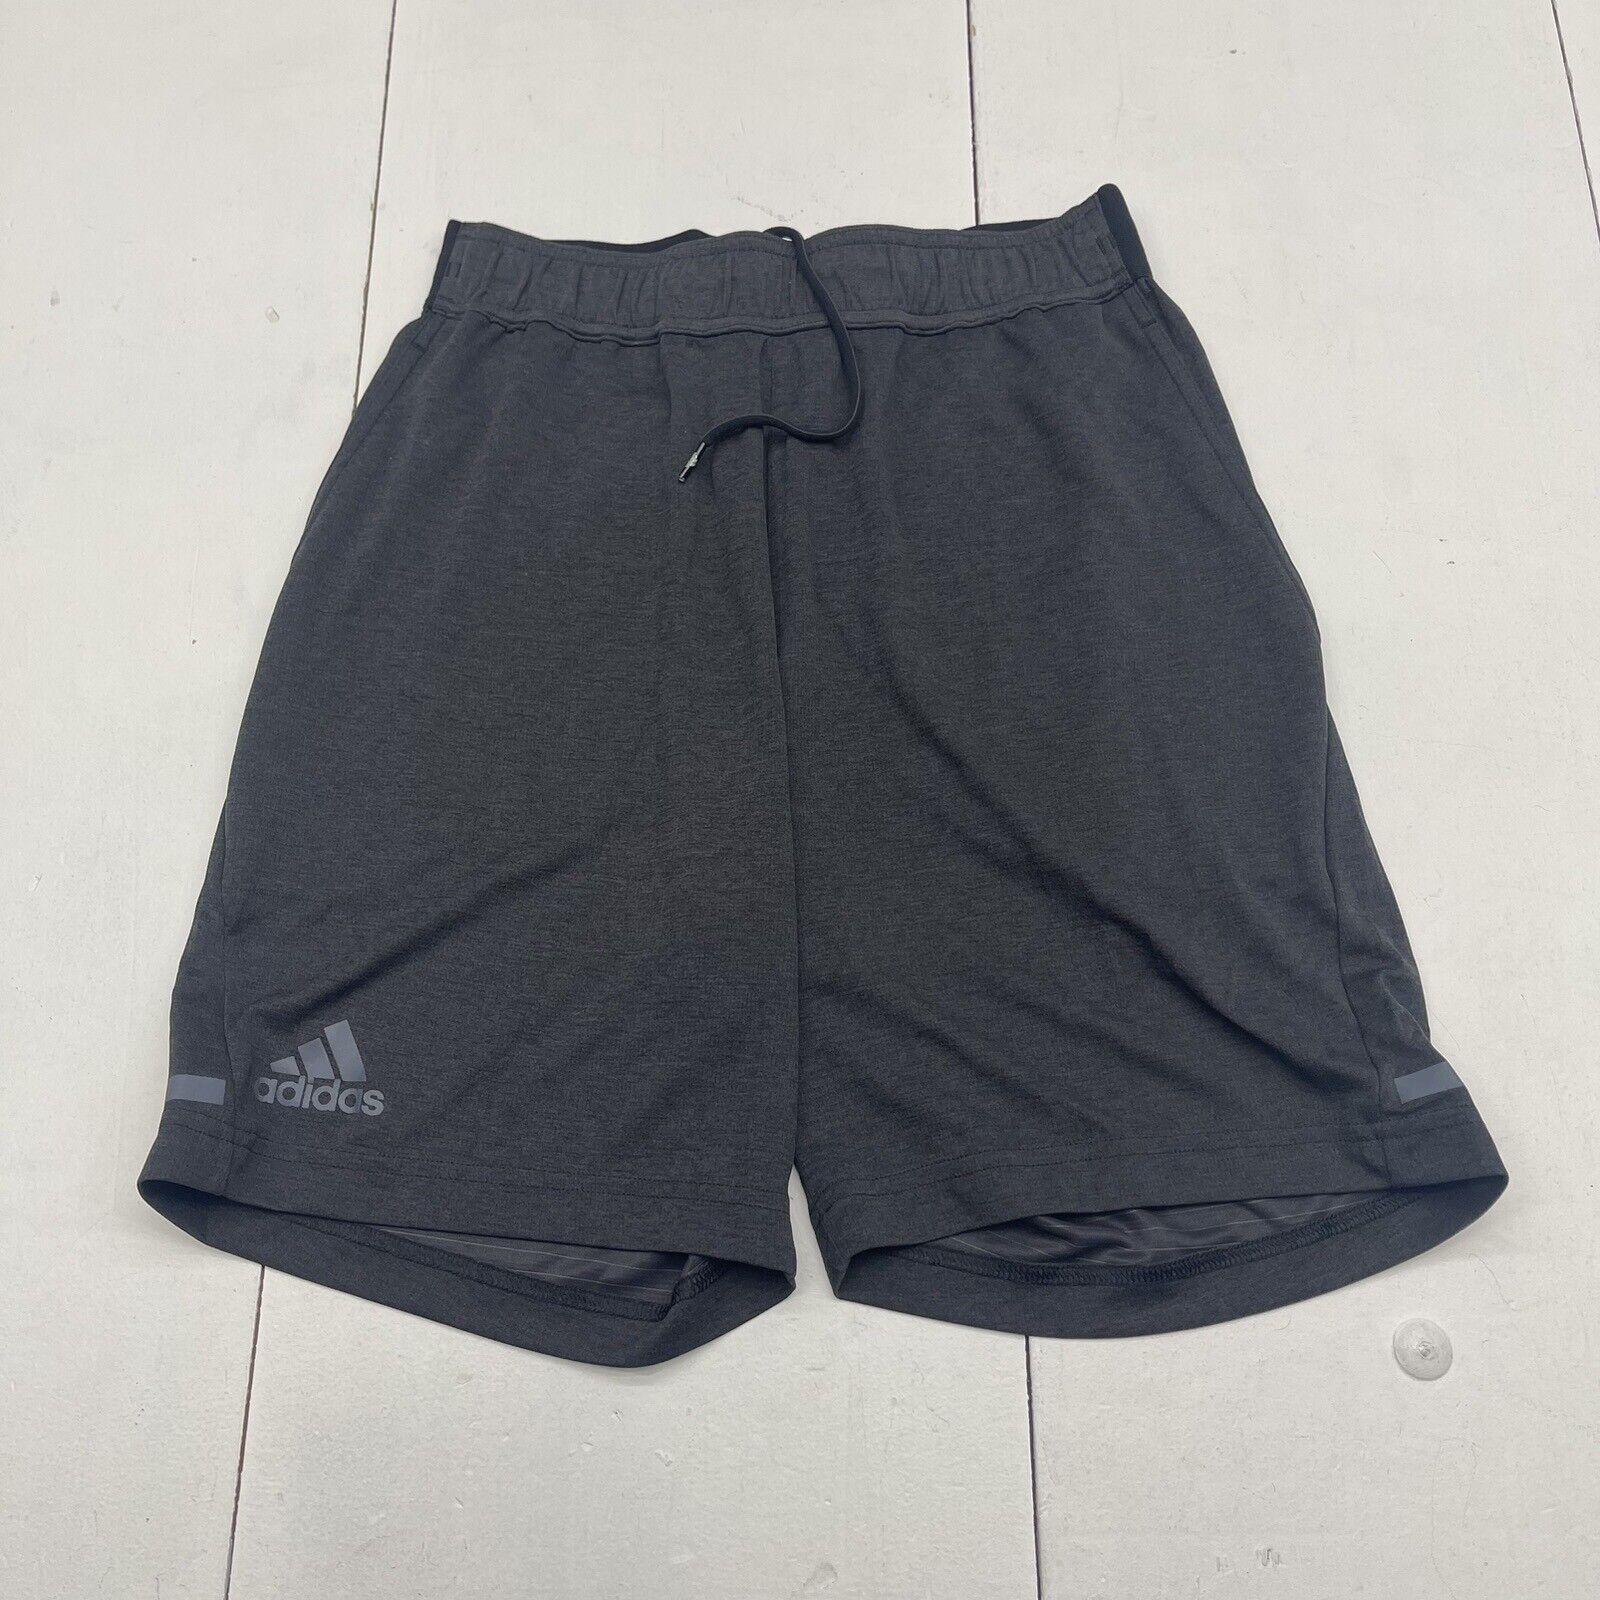 Adidas Black Athletic Shorts Men's Size Large NEW - beyond exchange